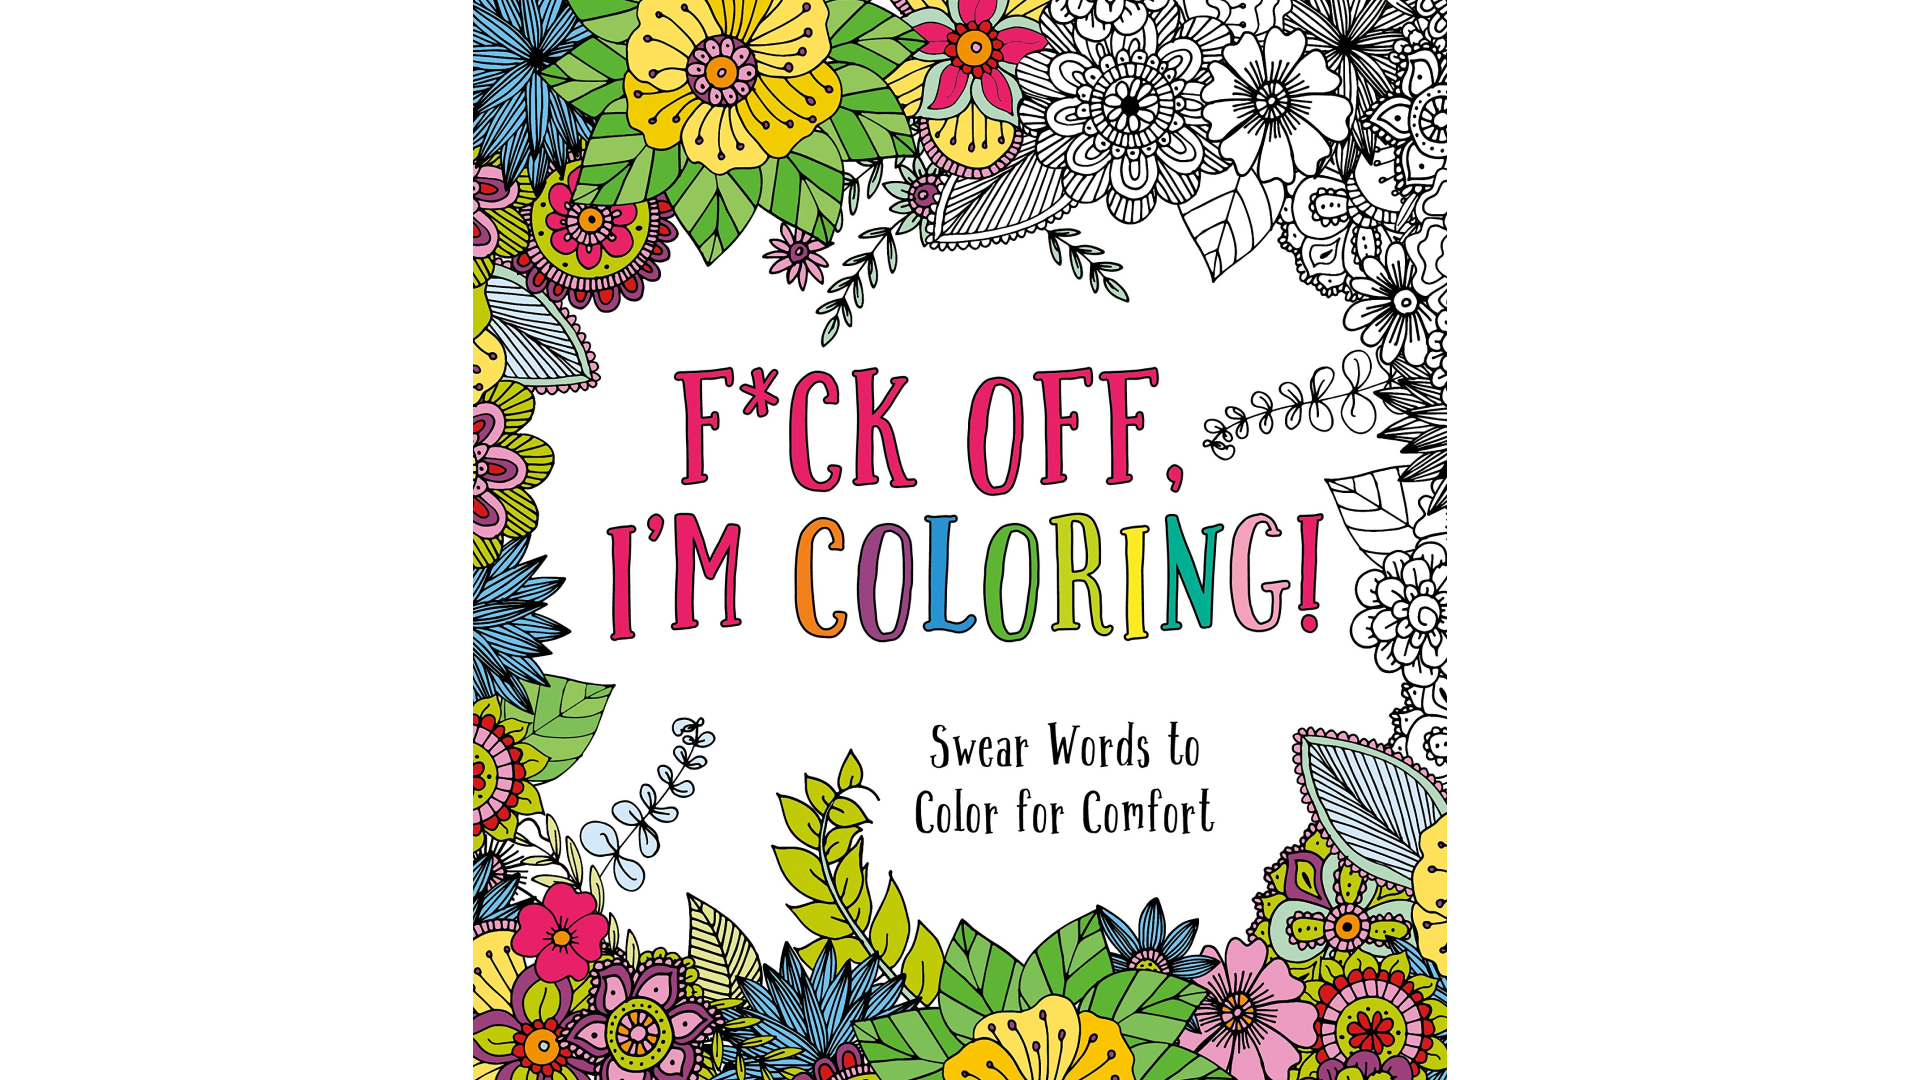 A coloring book